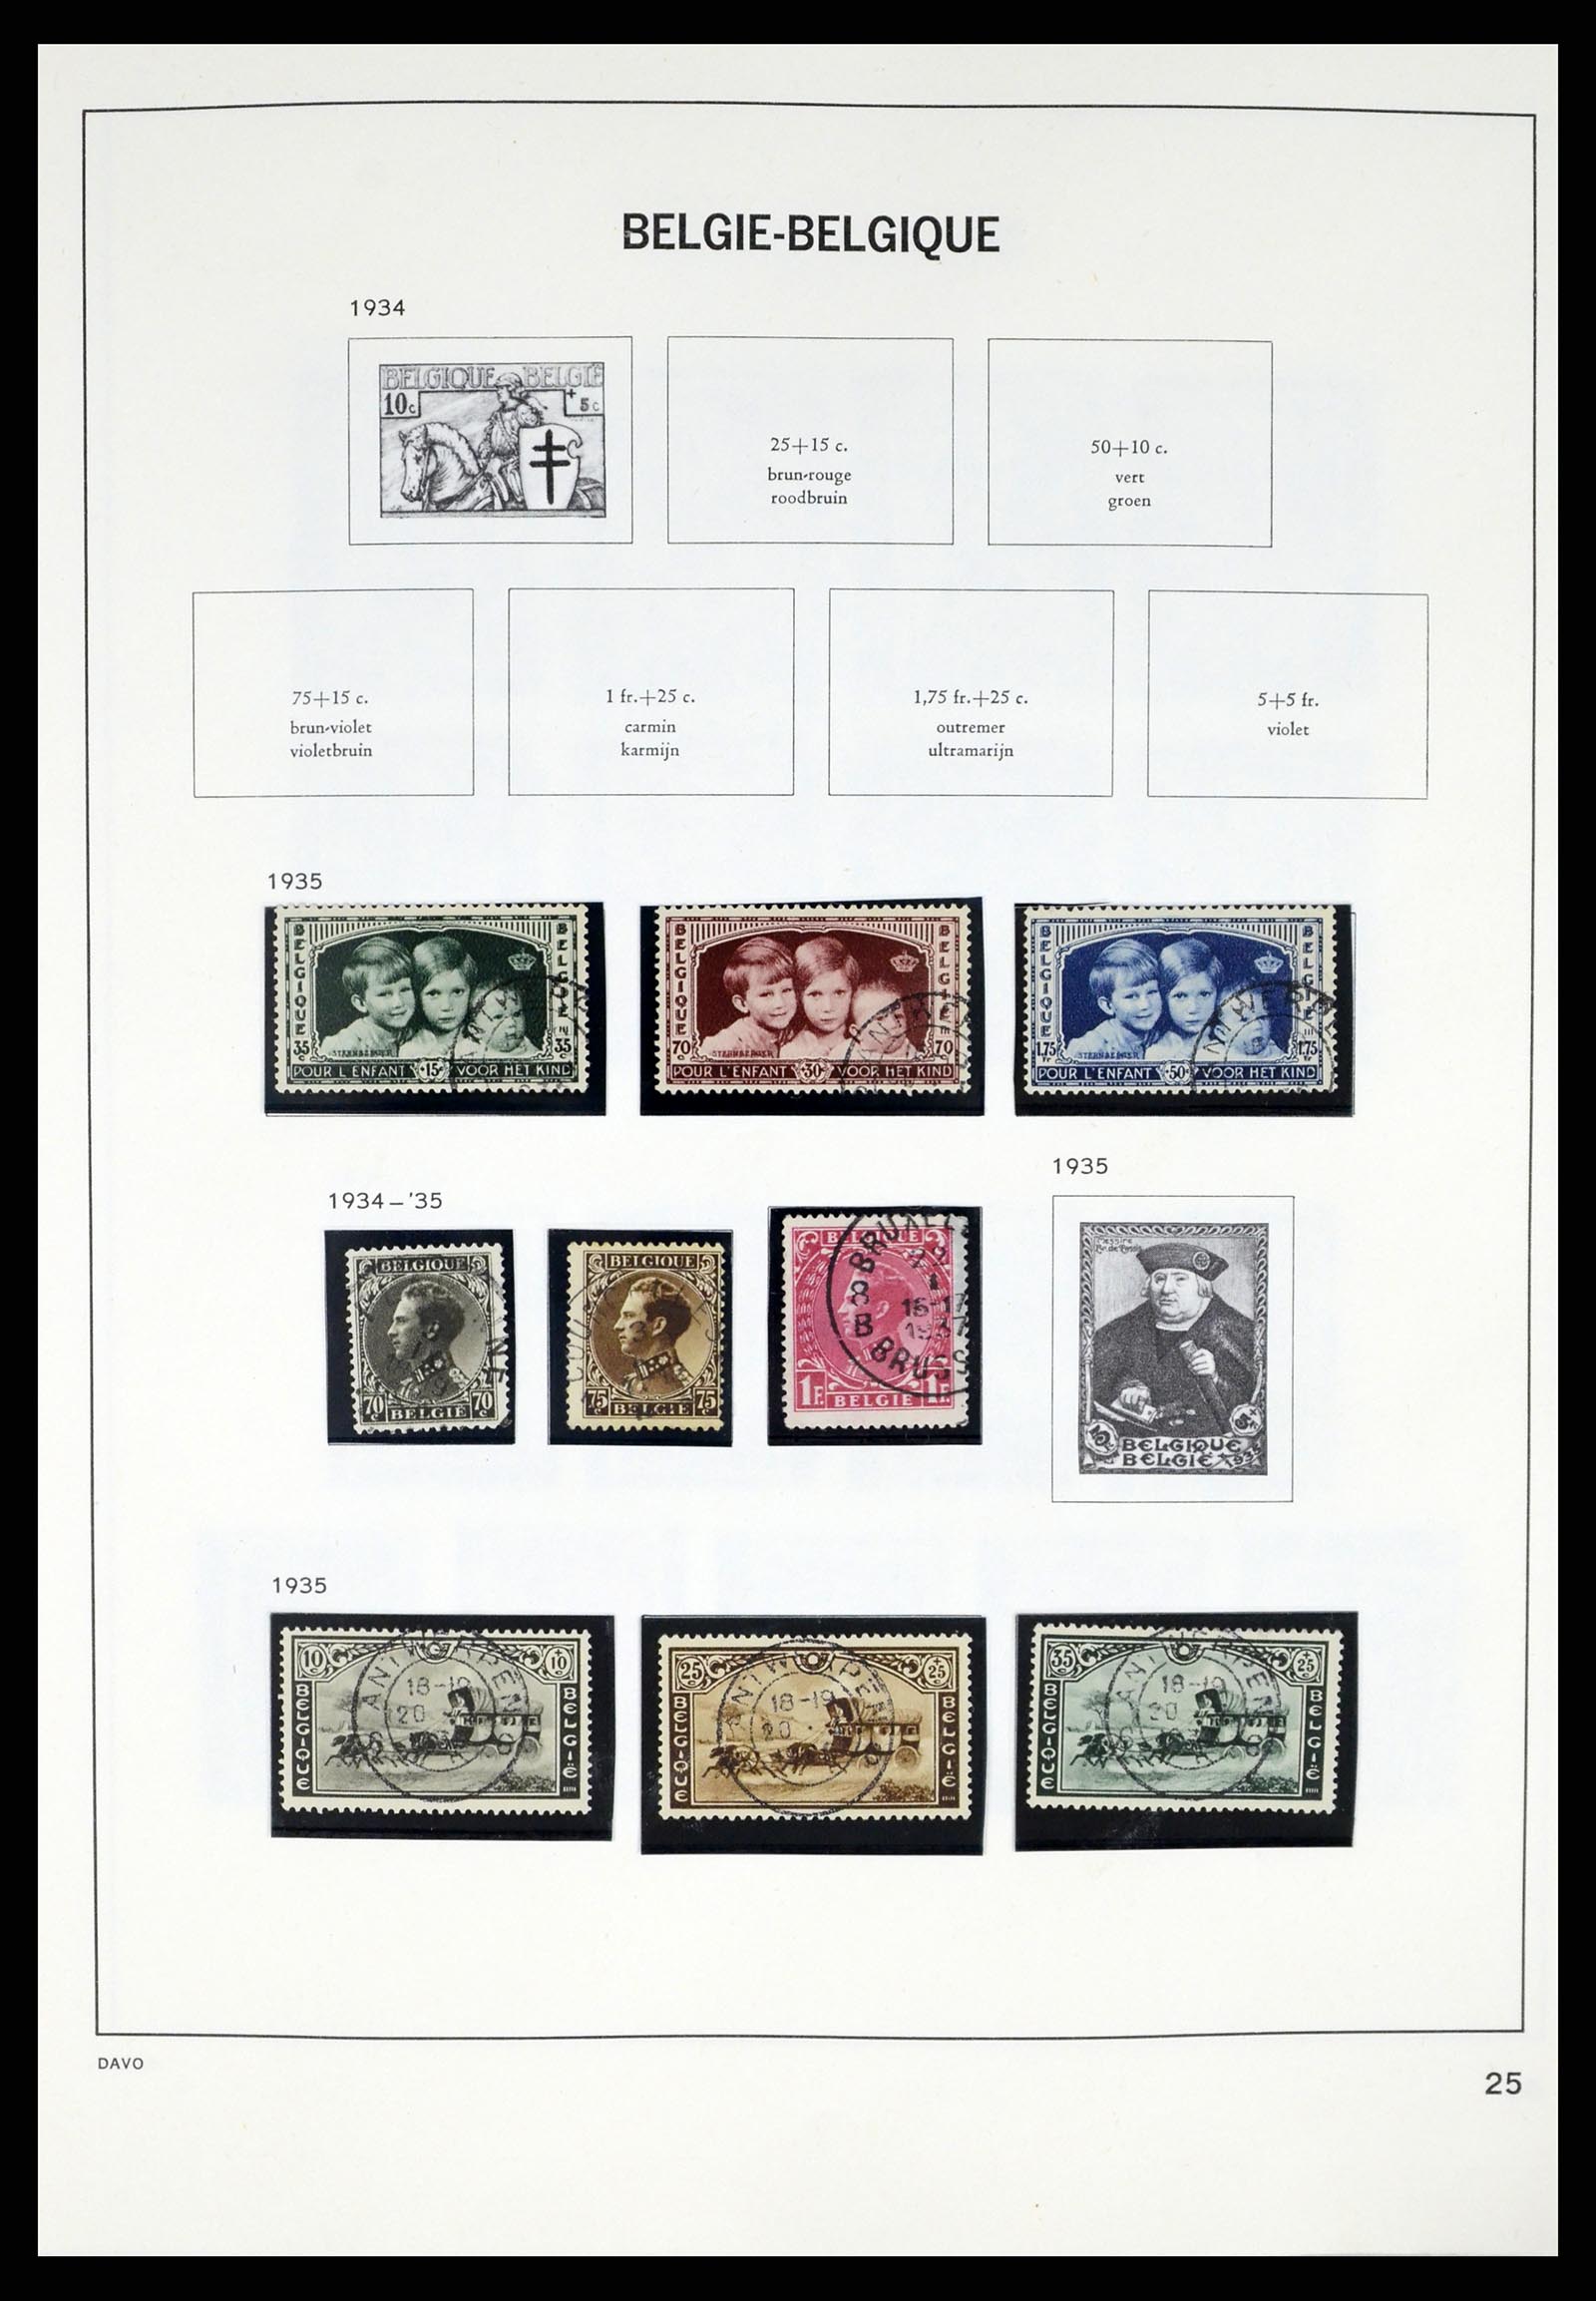 37367 023 - Stamp collection 37367 Belgium 1849-2003.